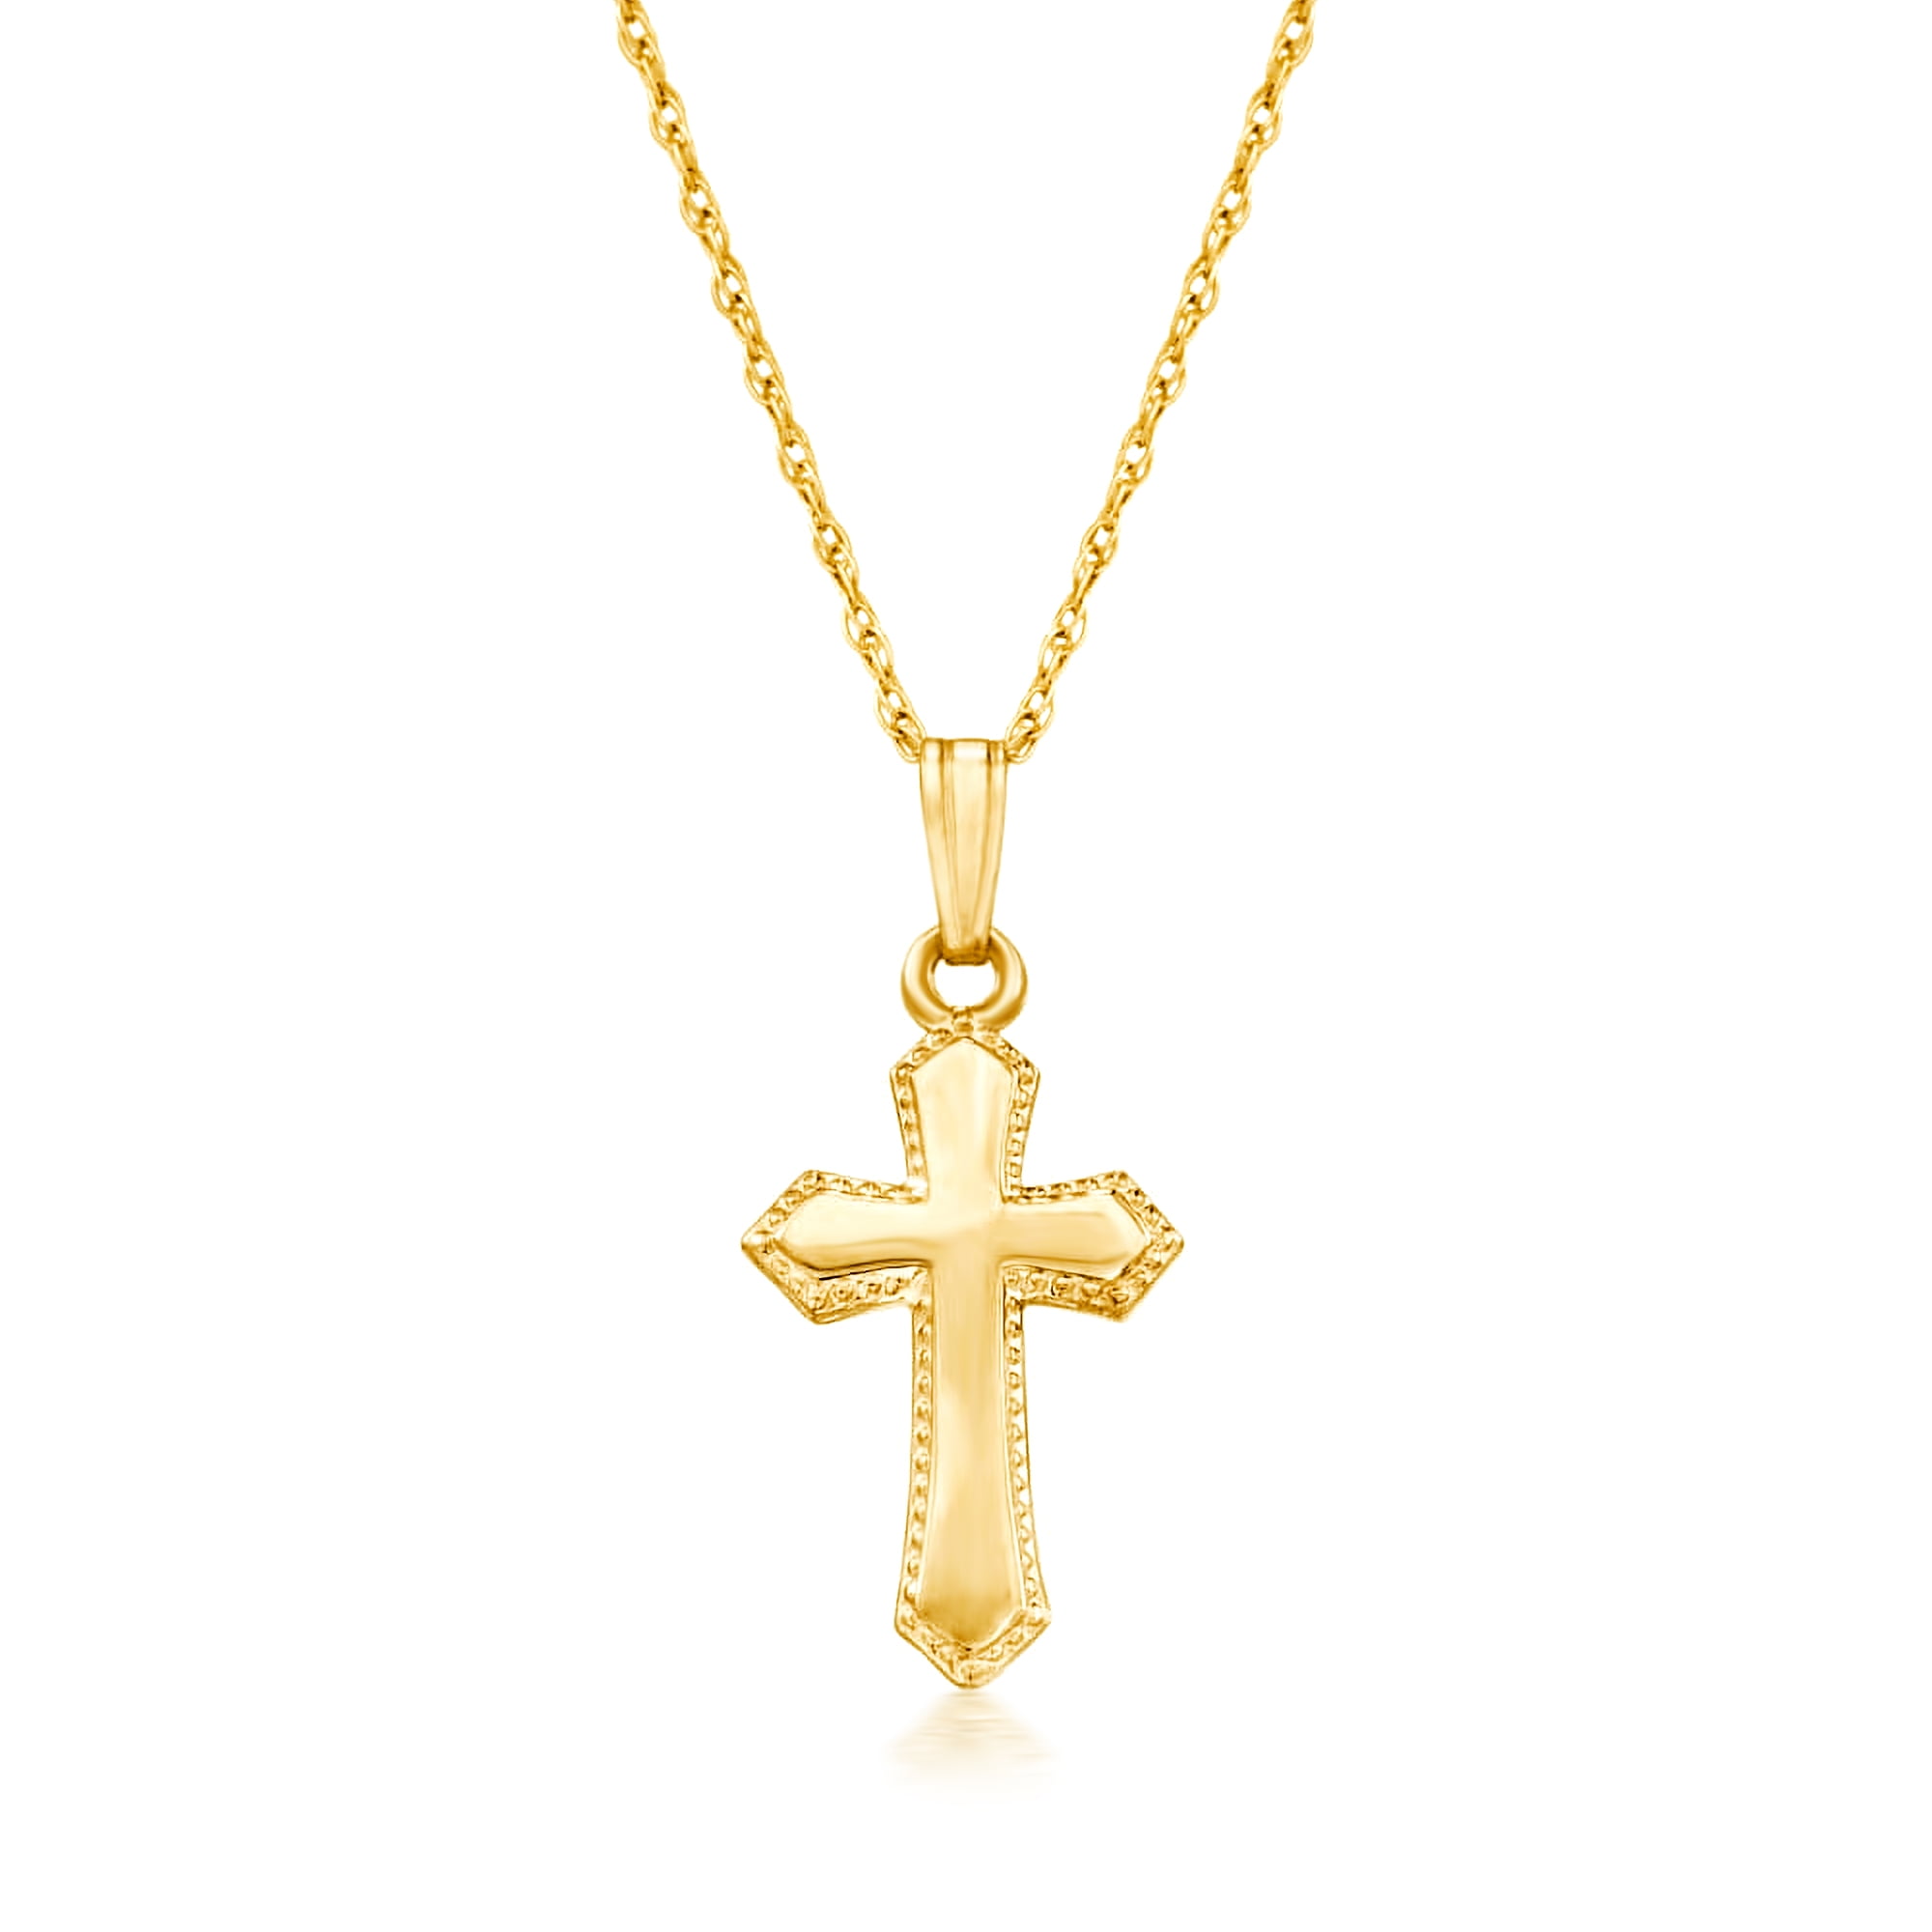 Beautifully Beveled Cross, Children's Necklace for Girls - 14K Gold